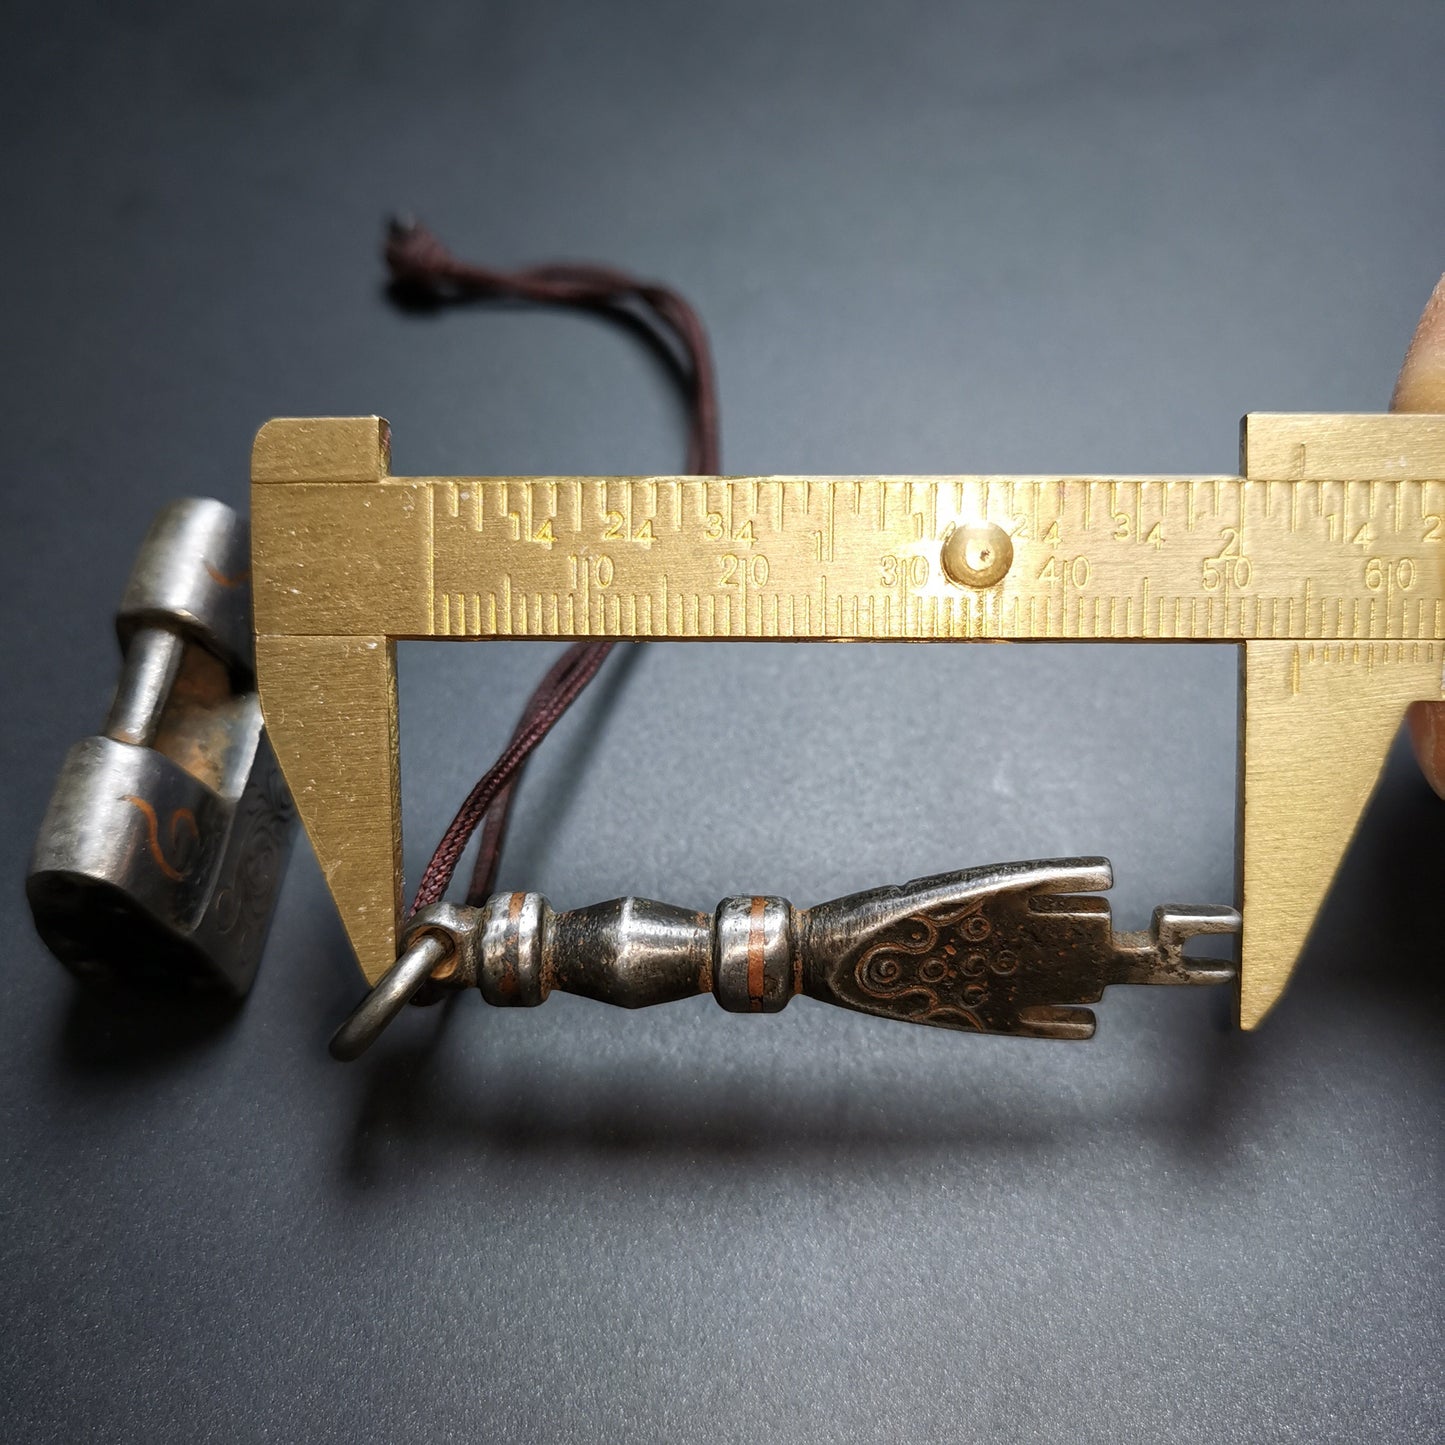 Gandhanra Handmade Antique Design Iron Padlock Amulet From Tibetan, Prefect Mini Lock for Home Decor / Suitcase